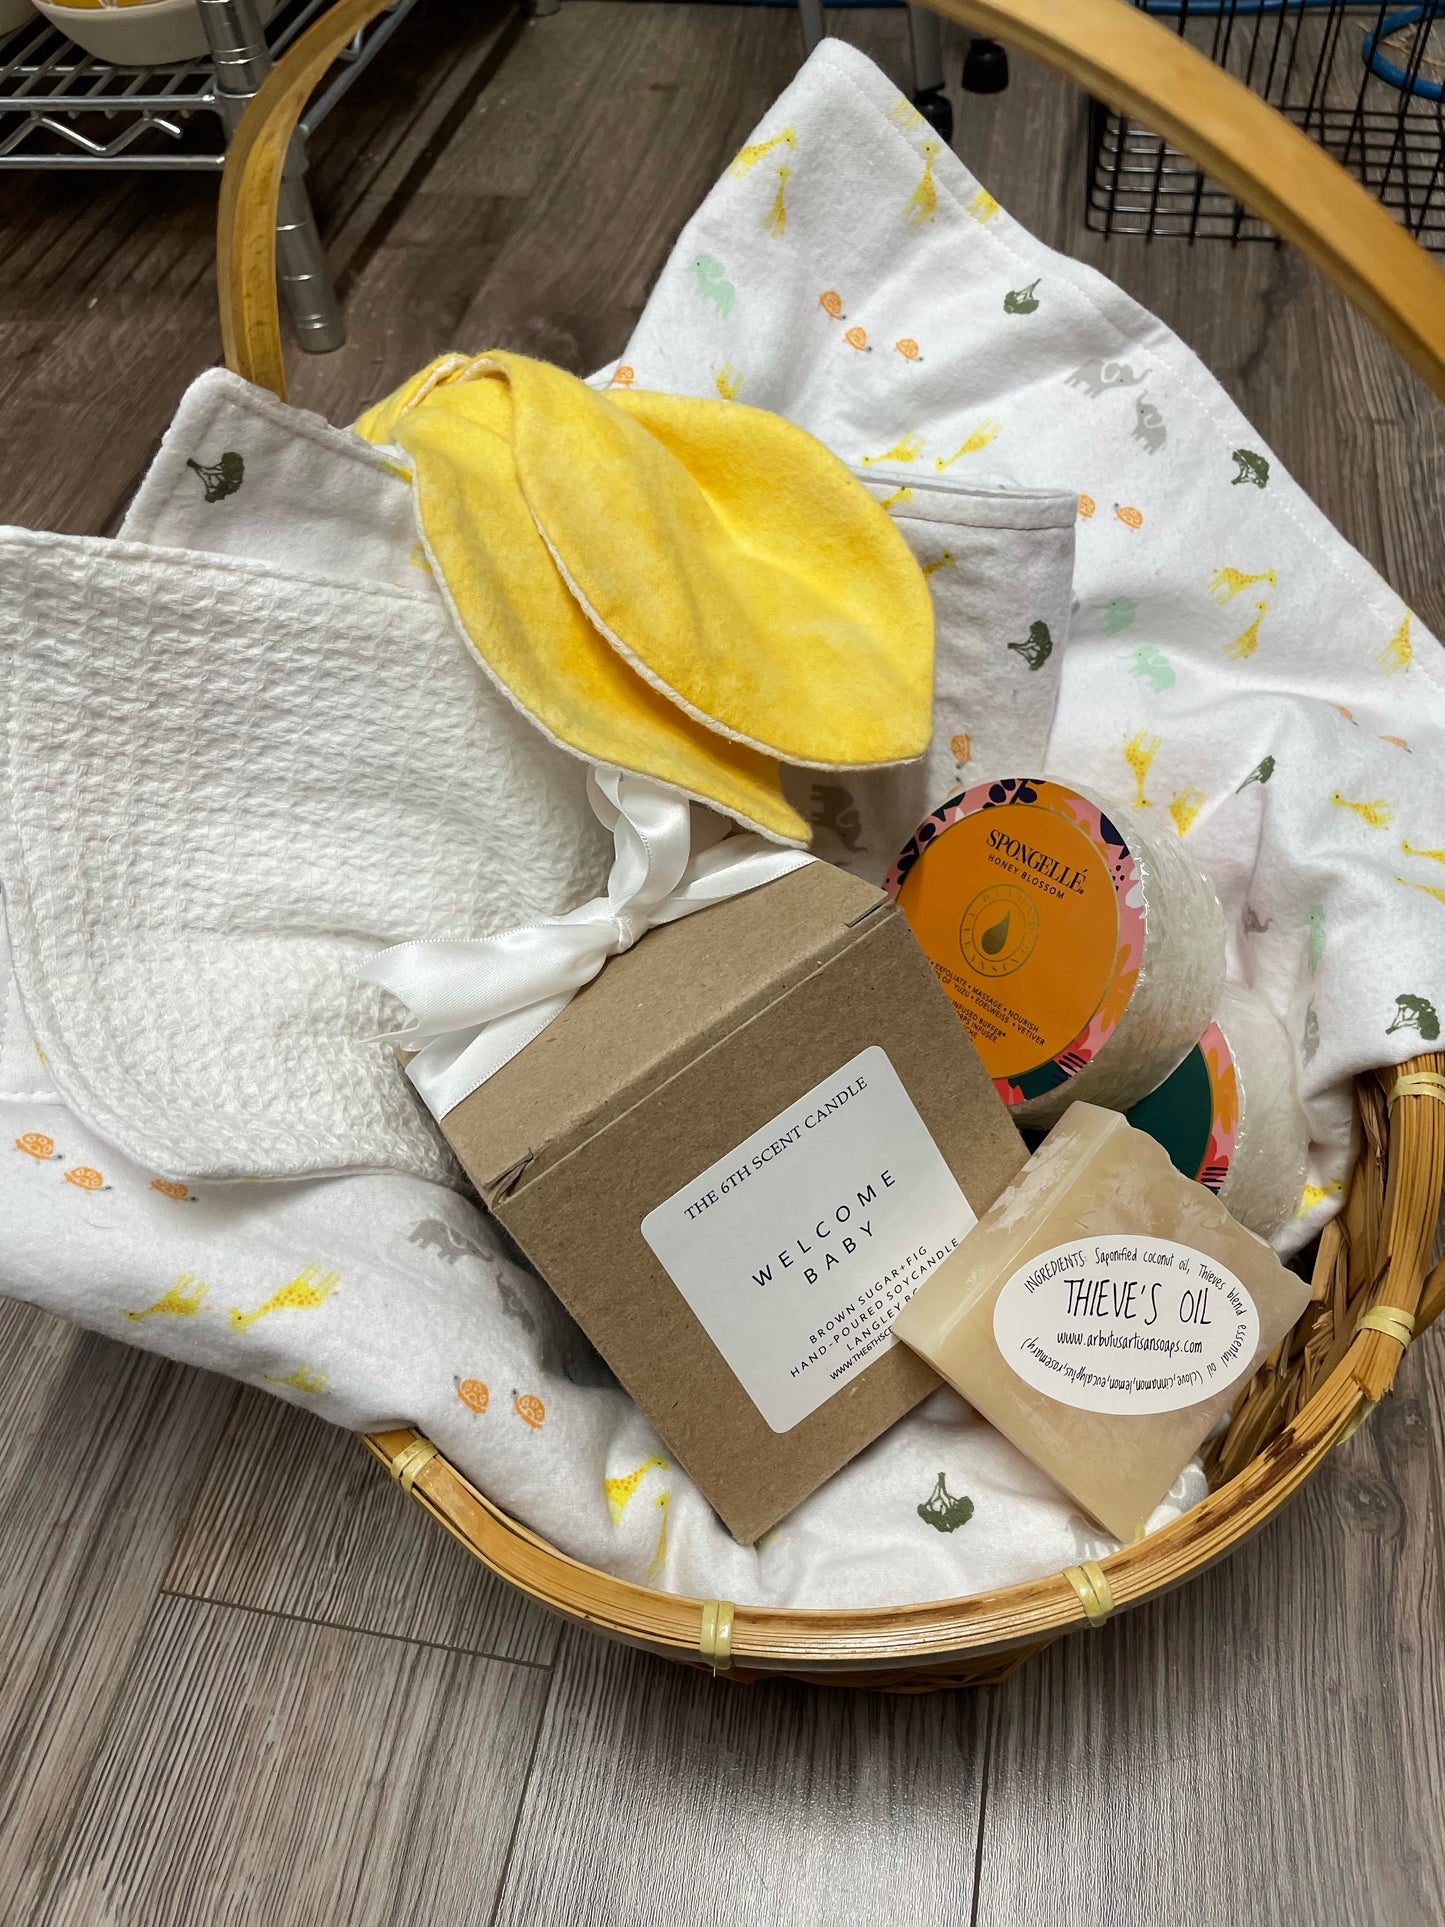 Custom Gift Basket - any occasion!